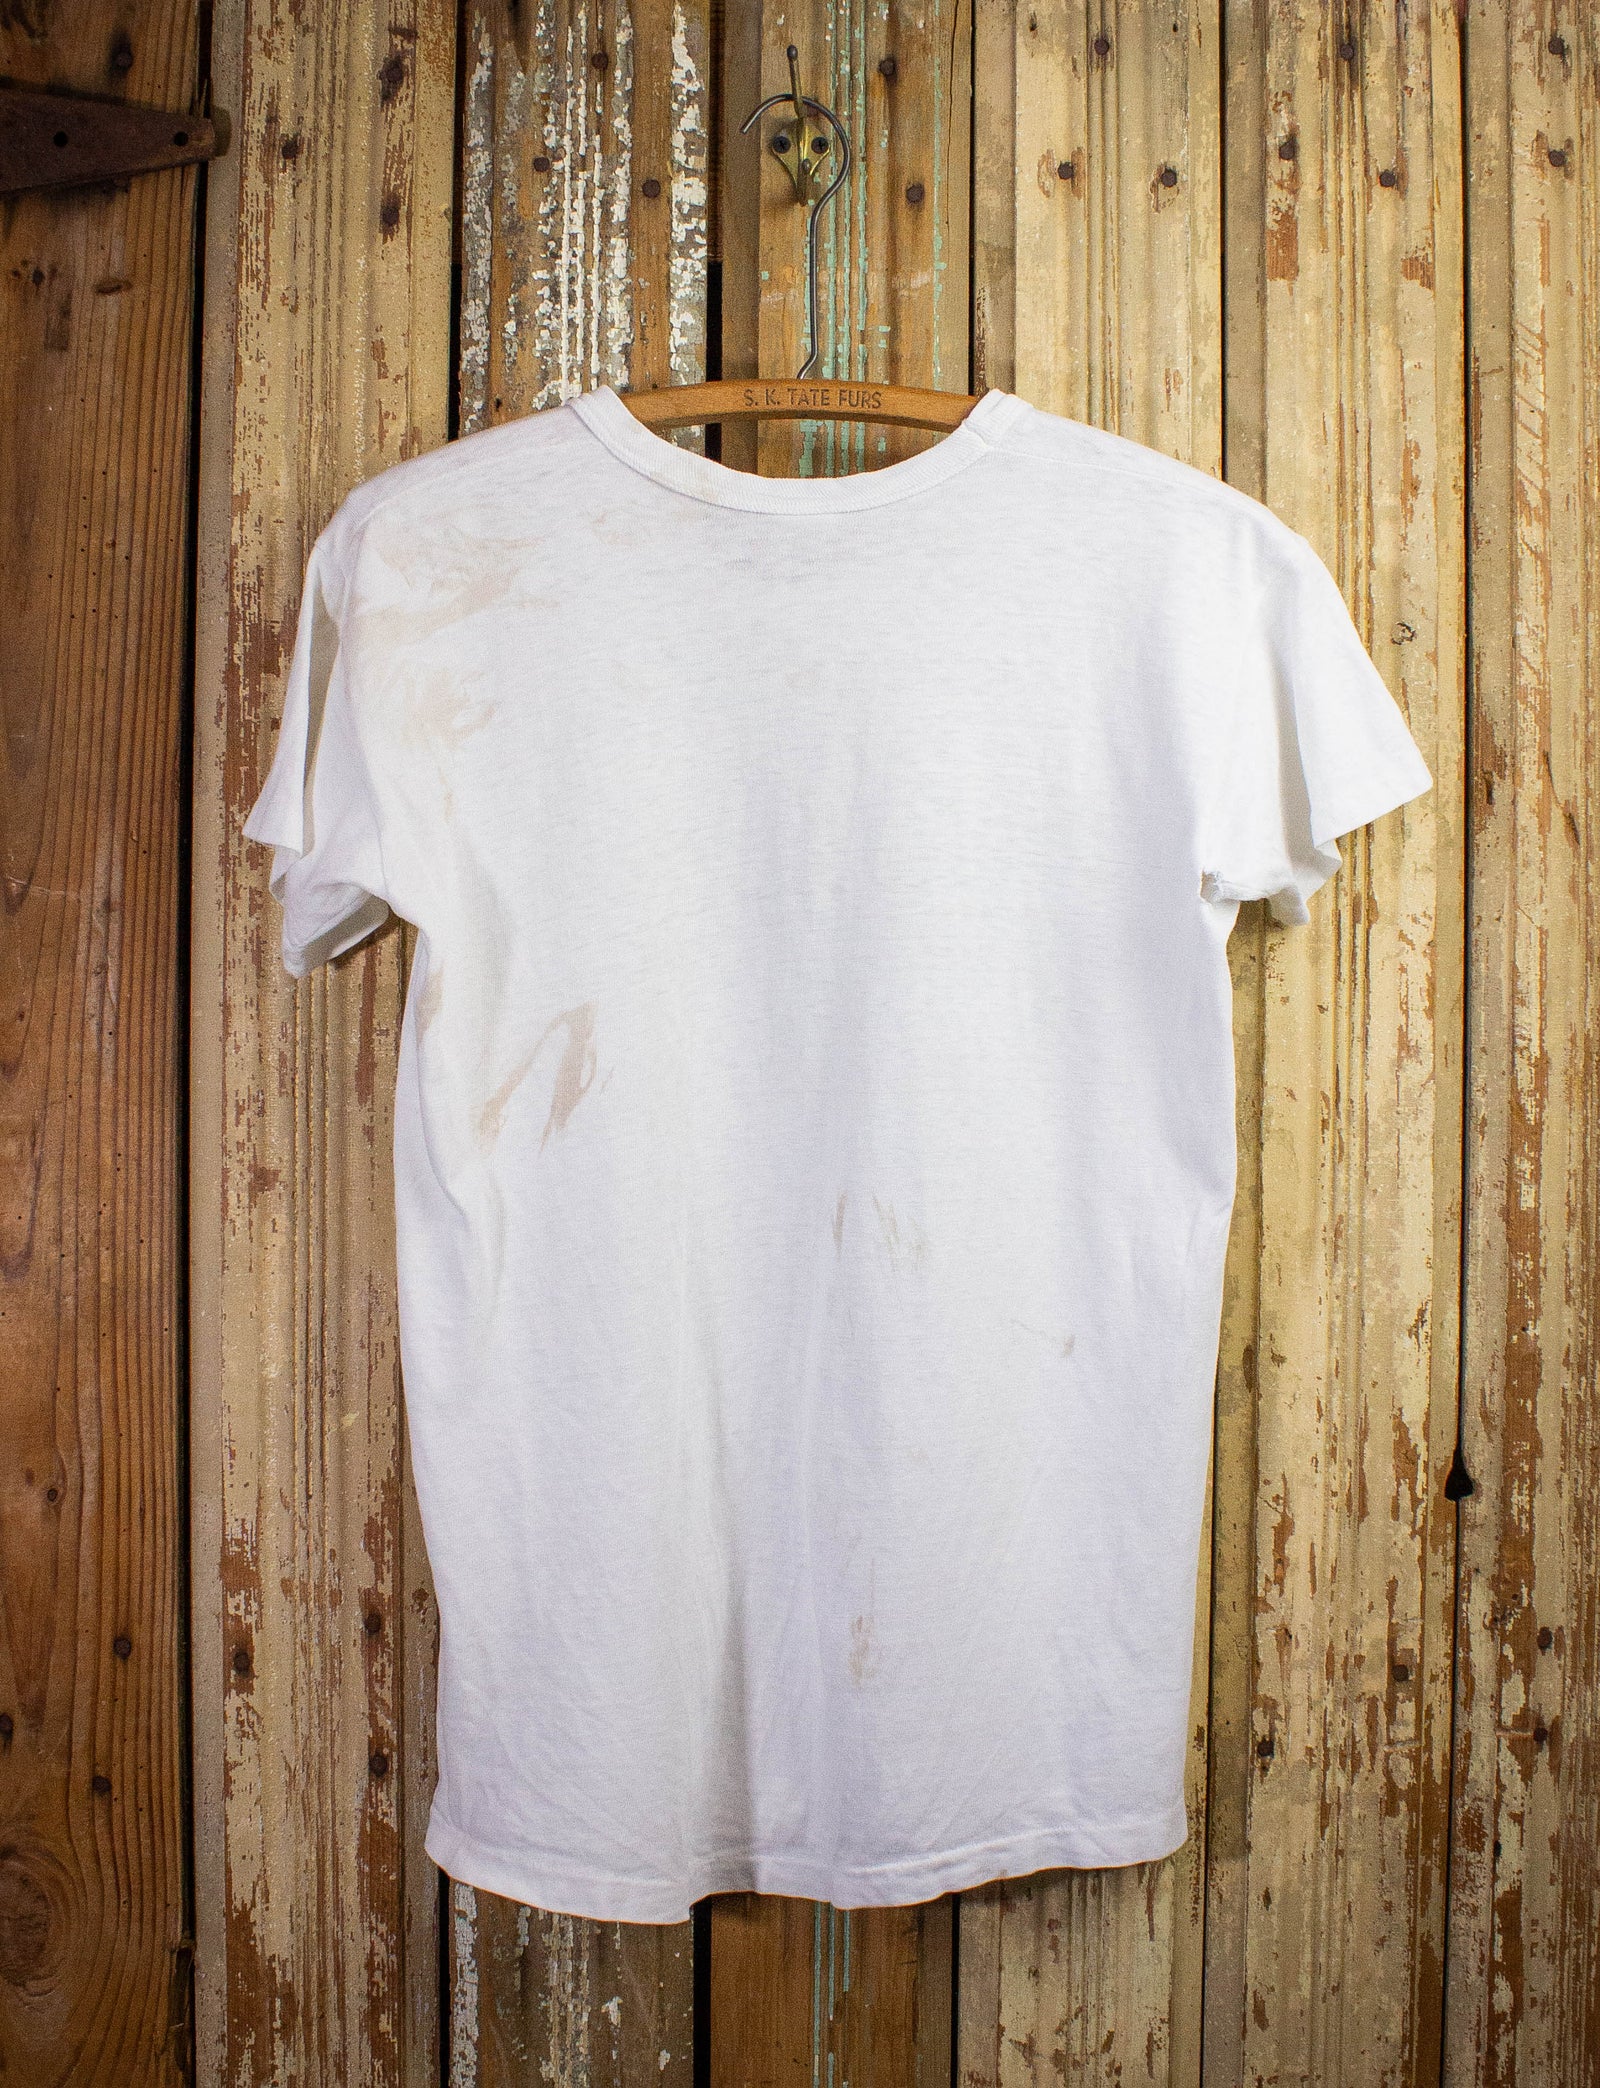 Vintage Madcap Concert T Shirt 70s White Small